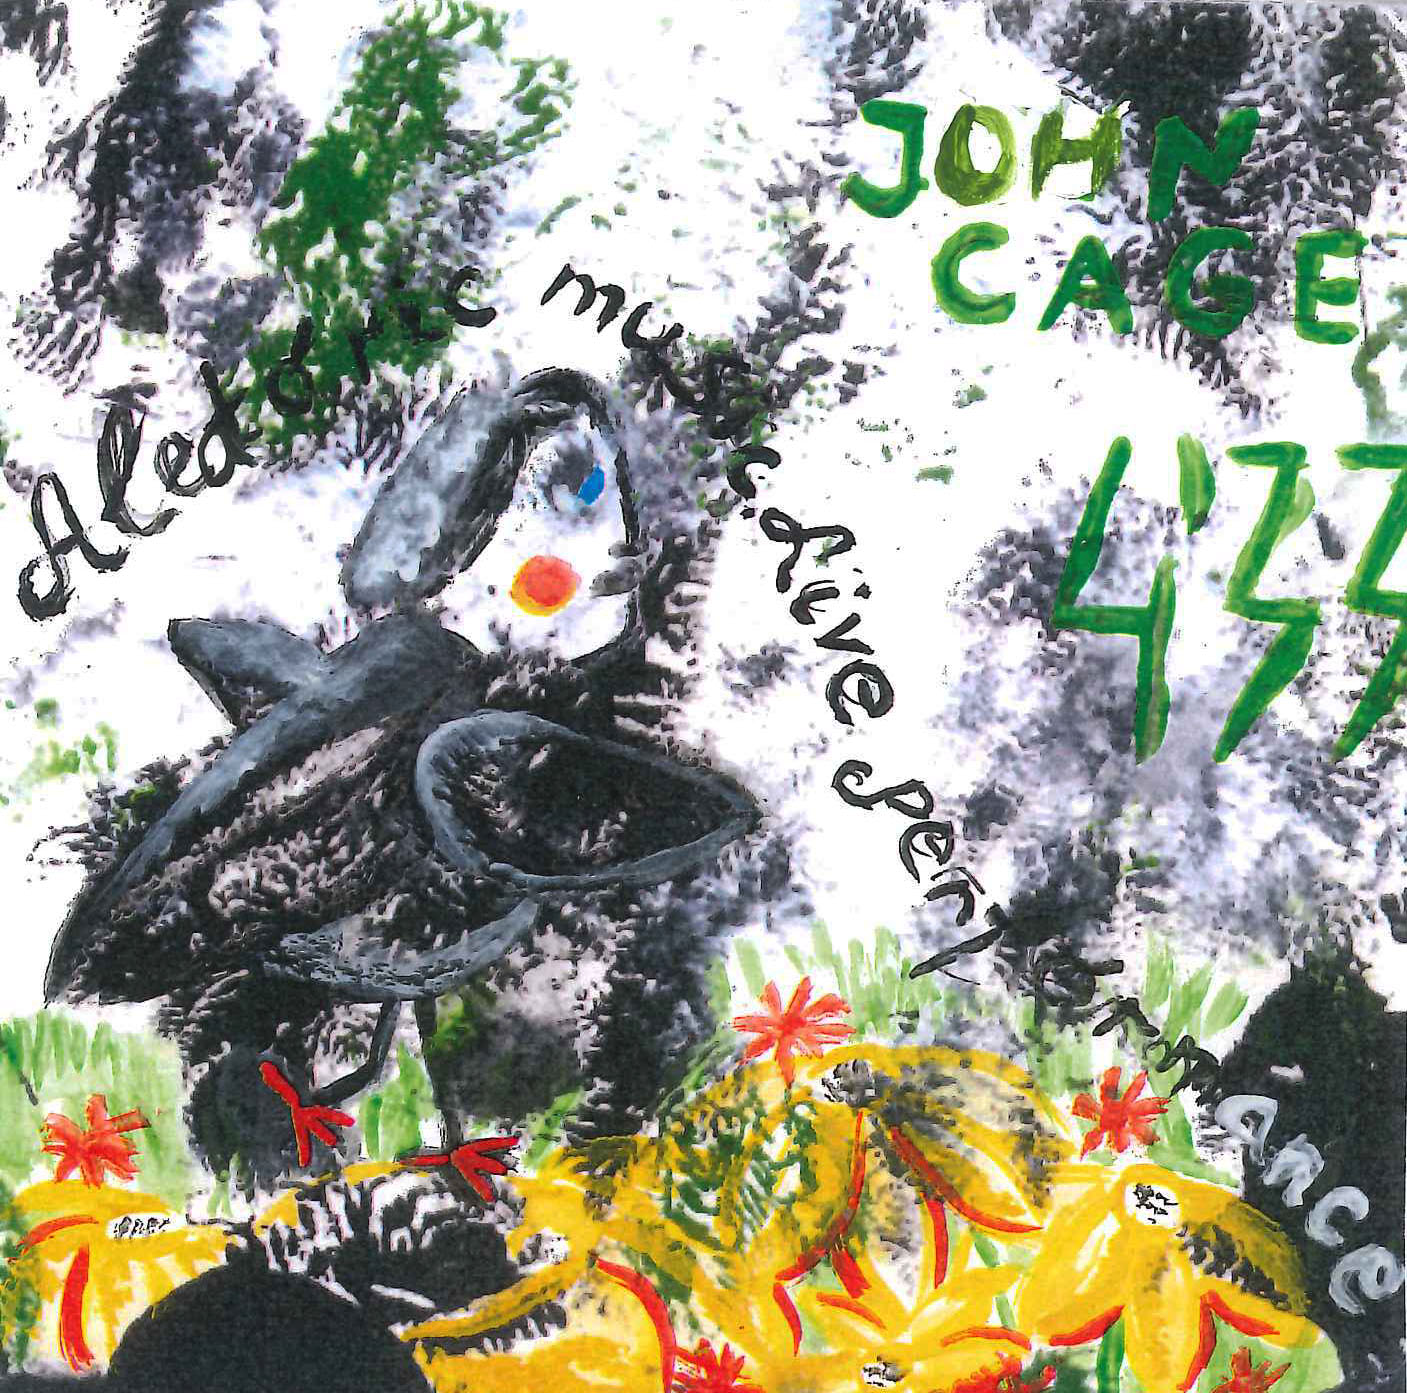 Ieva Gudonyte: Painting 'John Cage. Aleatoric music 4'33' & Writing Poem